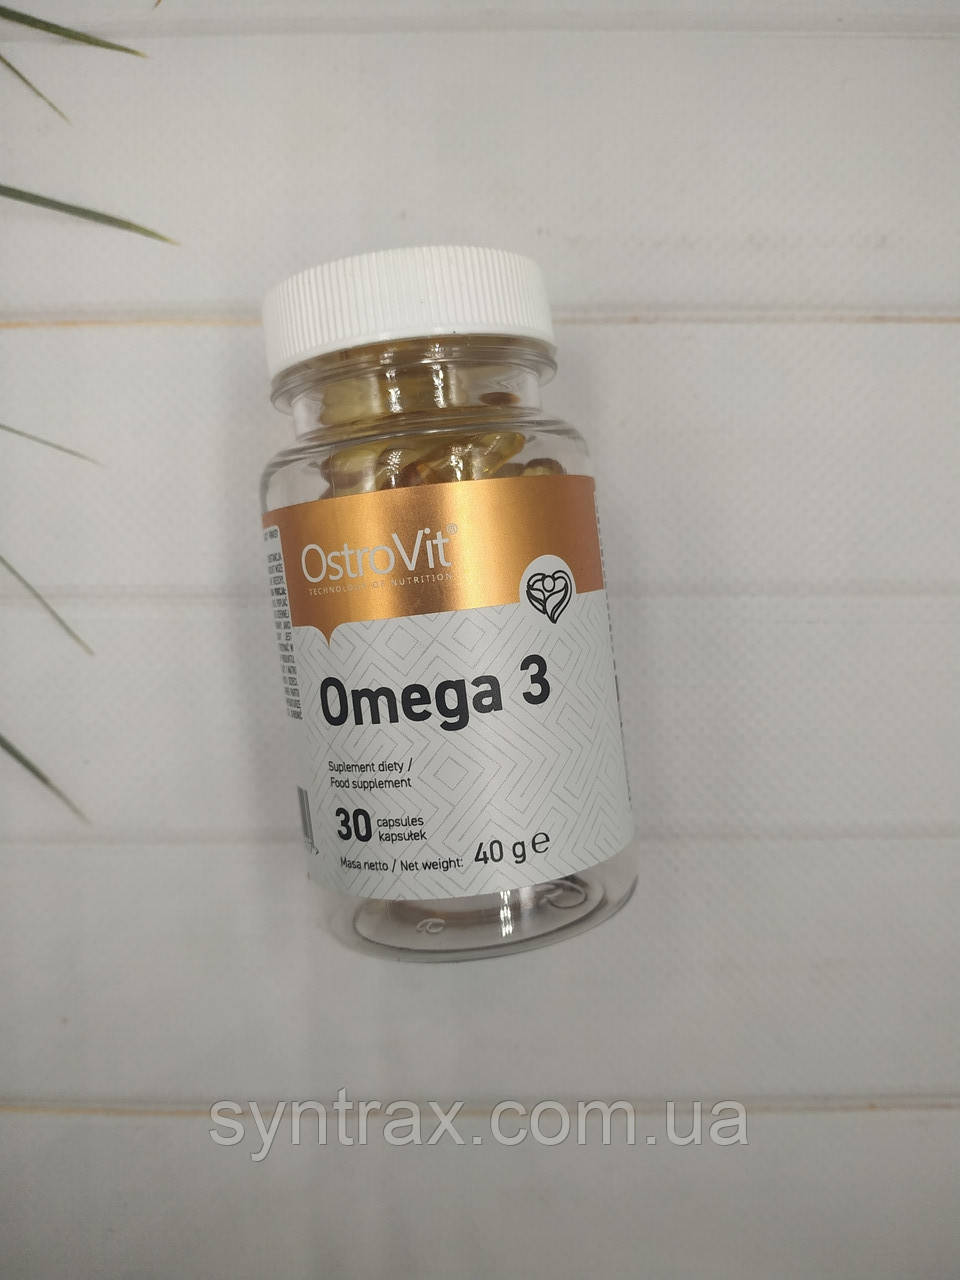 Omega-3 OstroVit 30 caps.